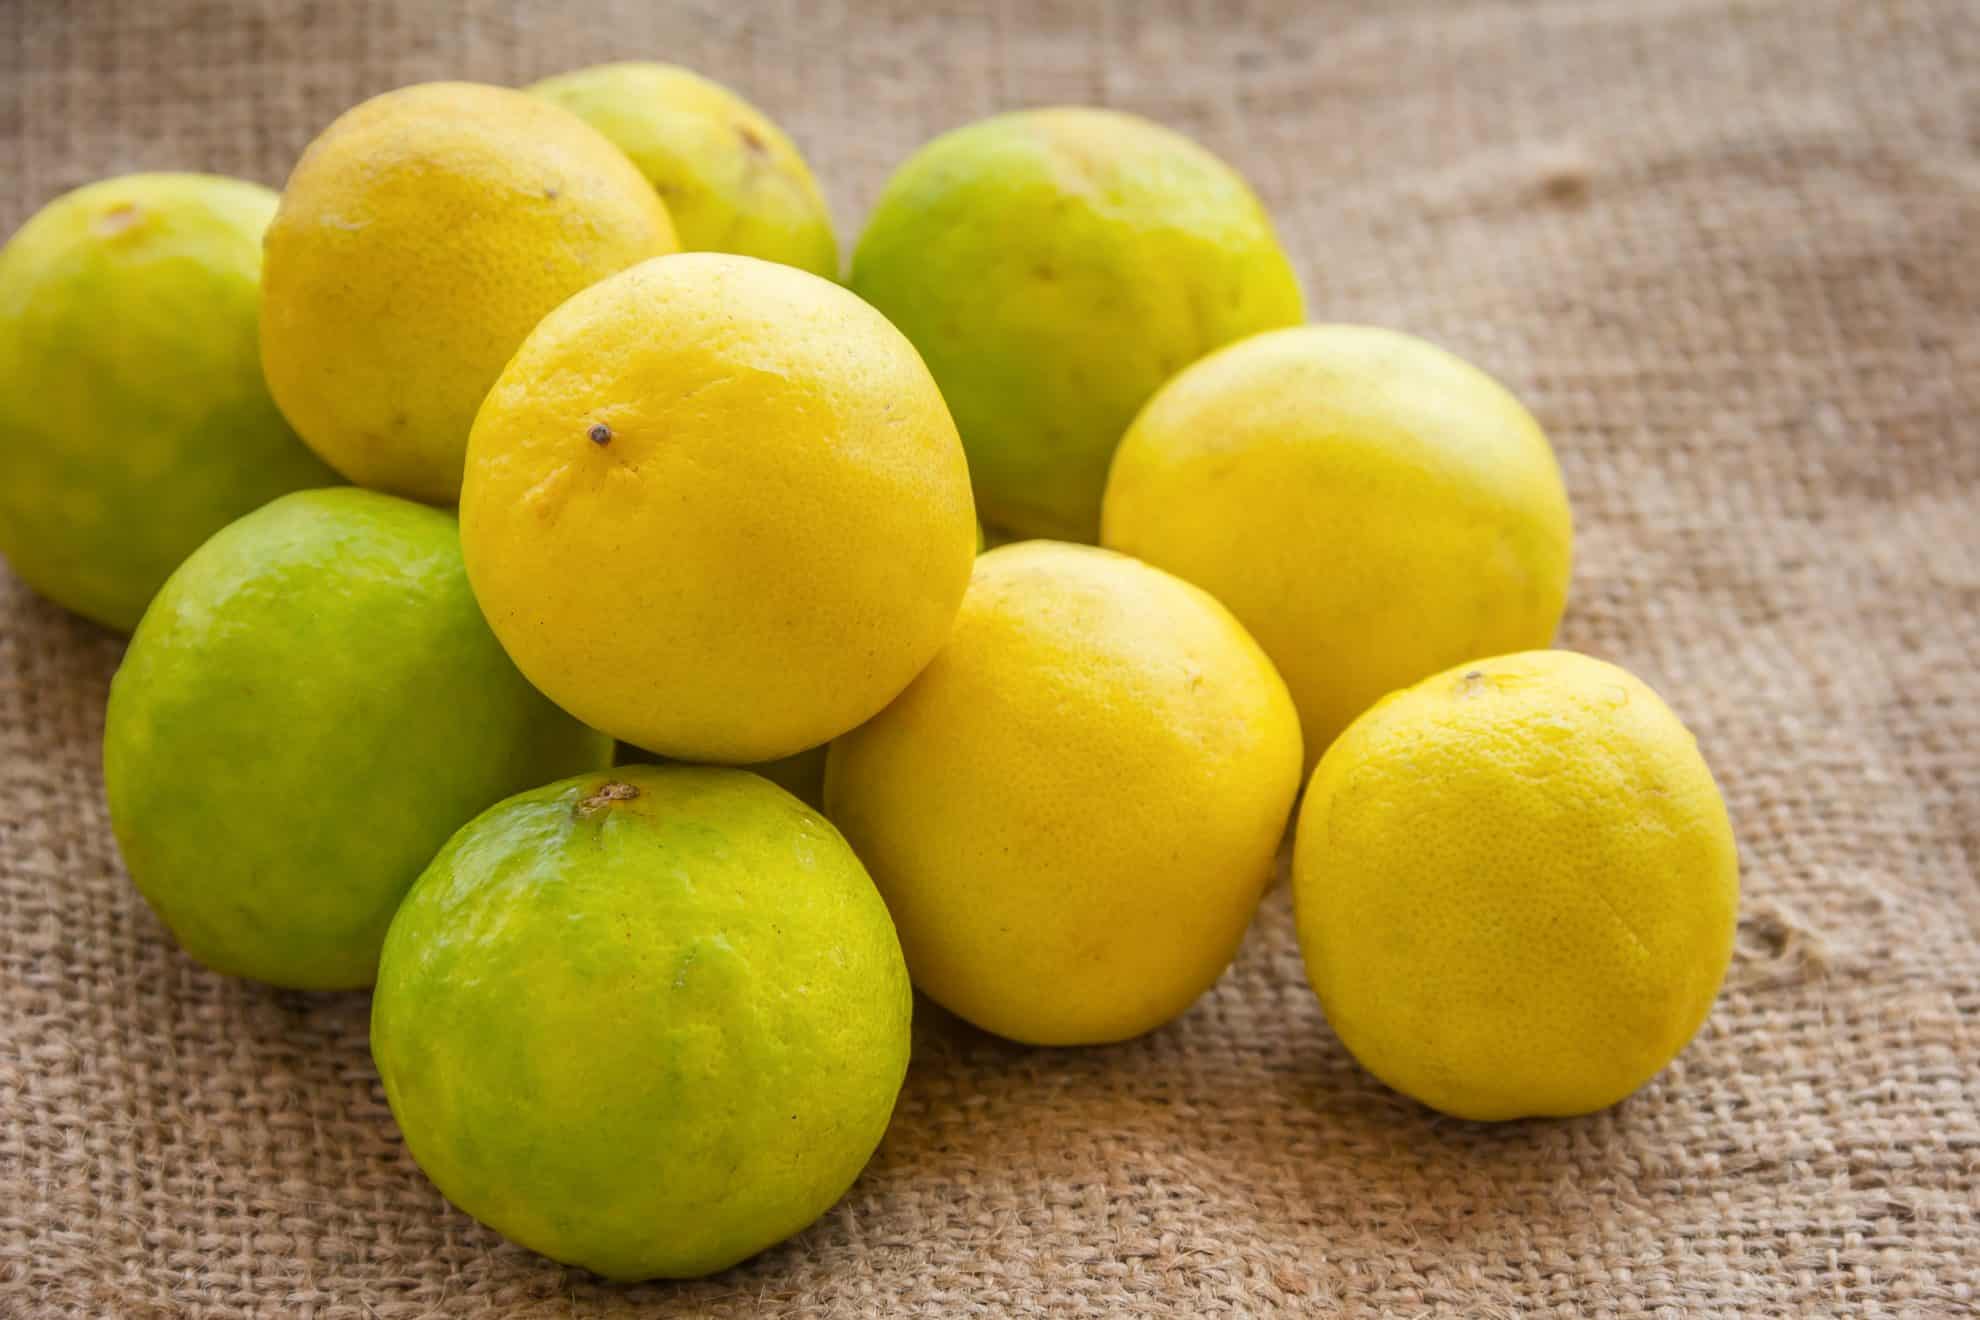 Lemons on burlap